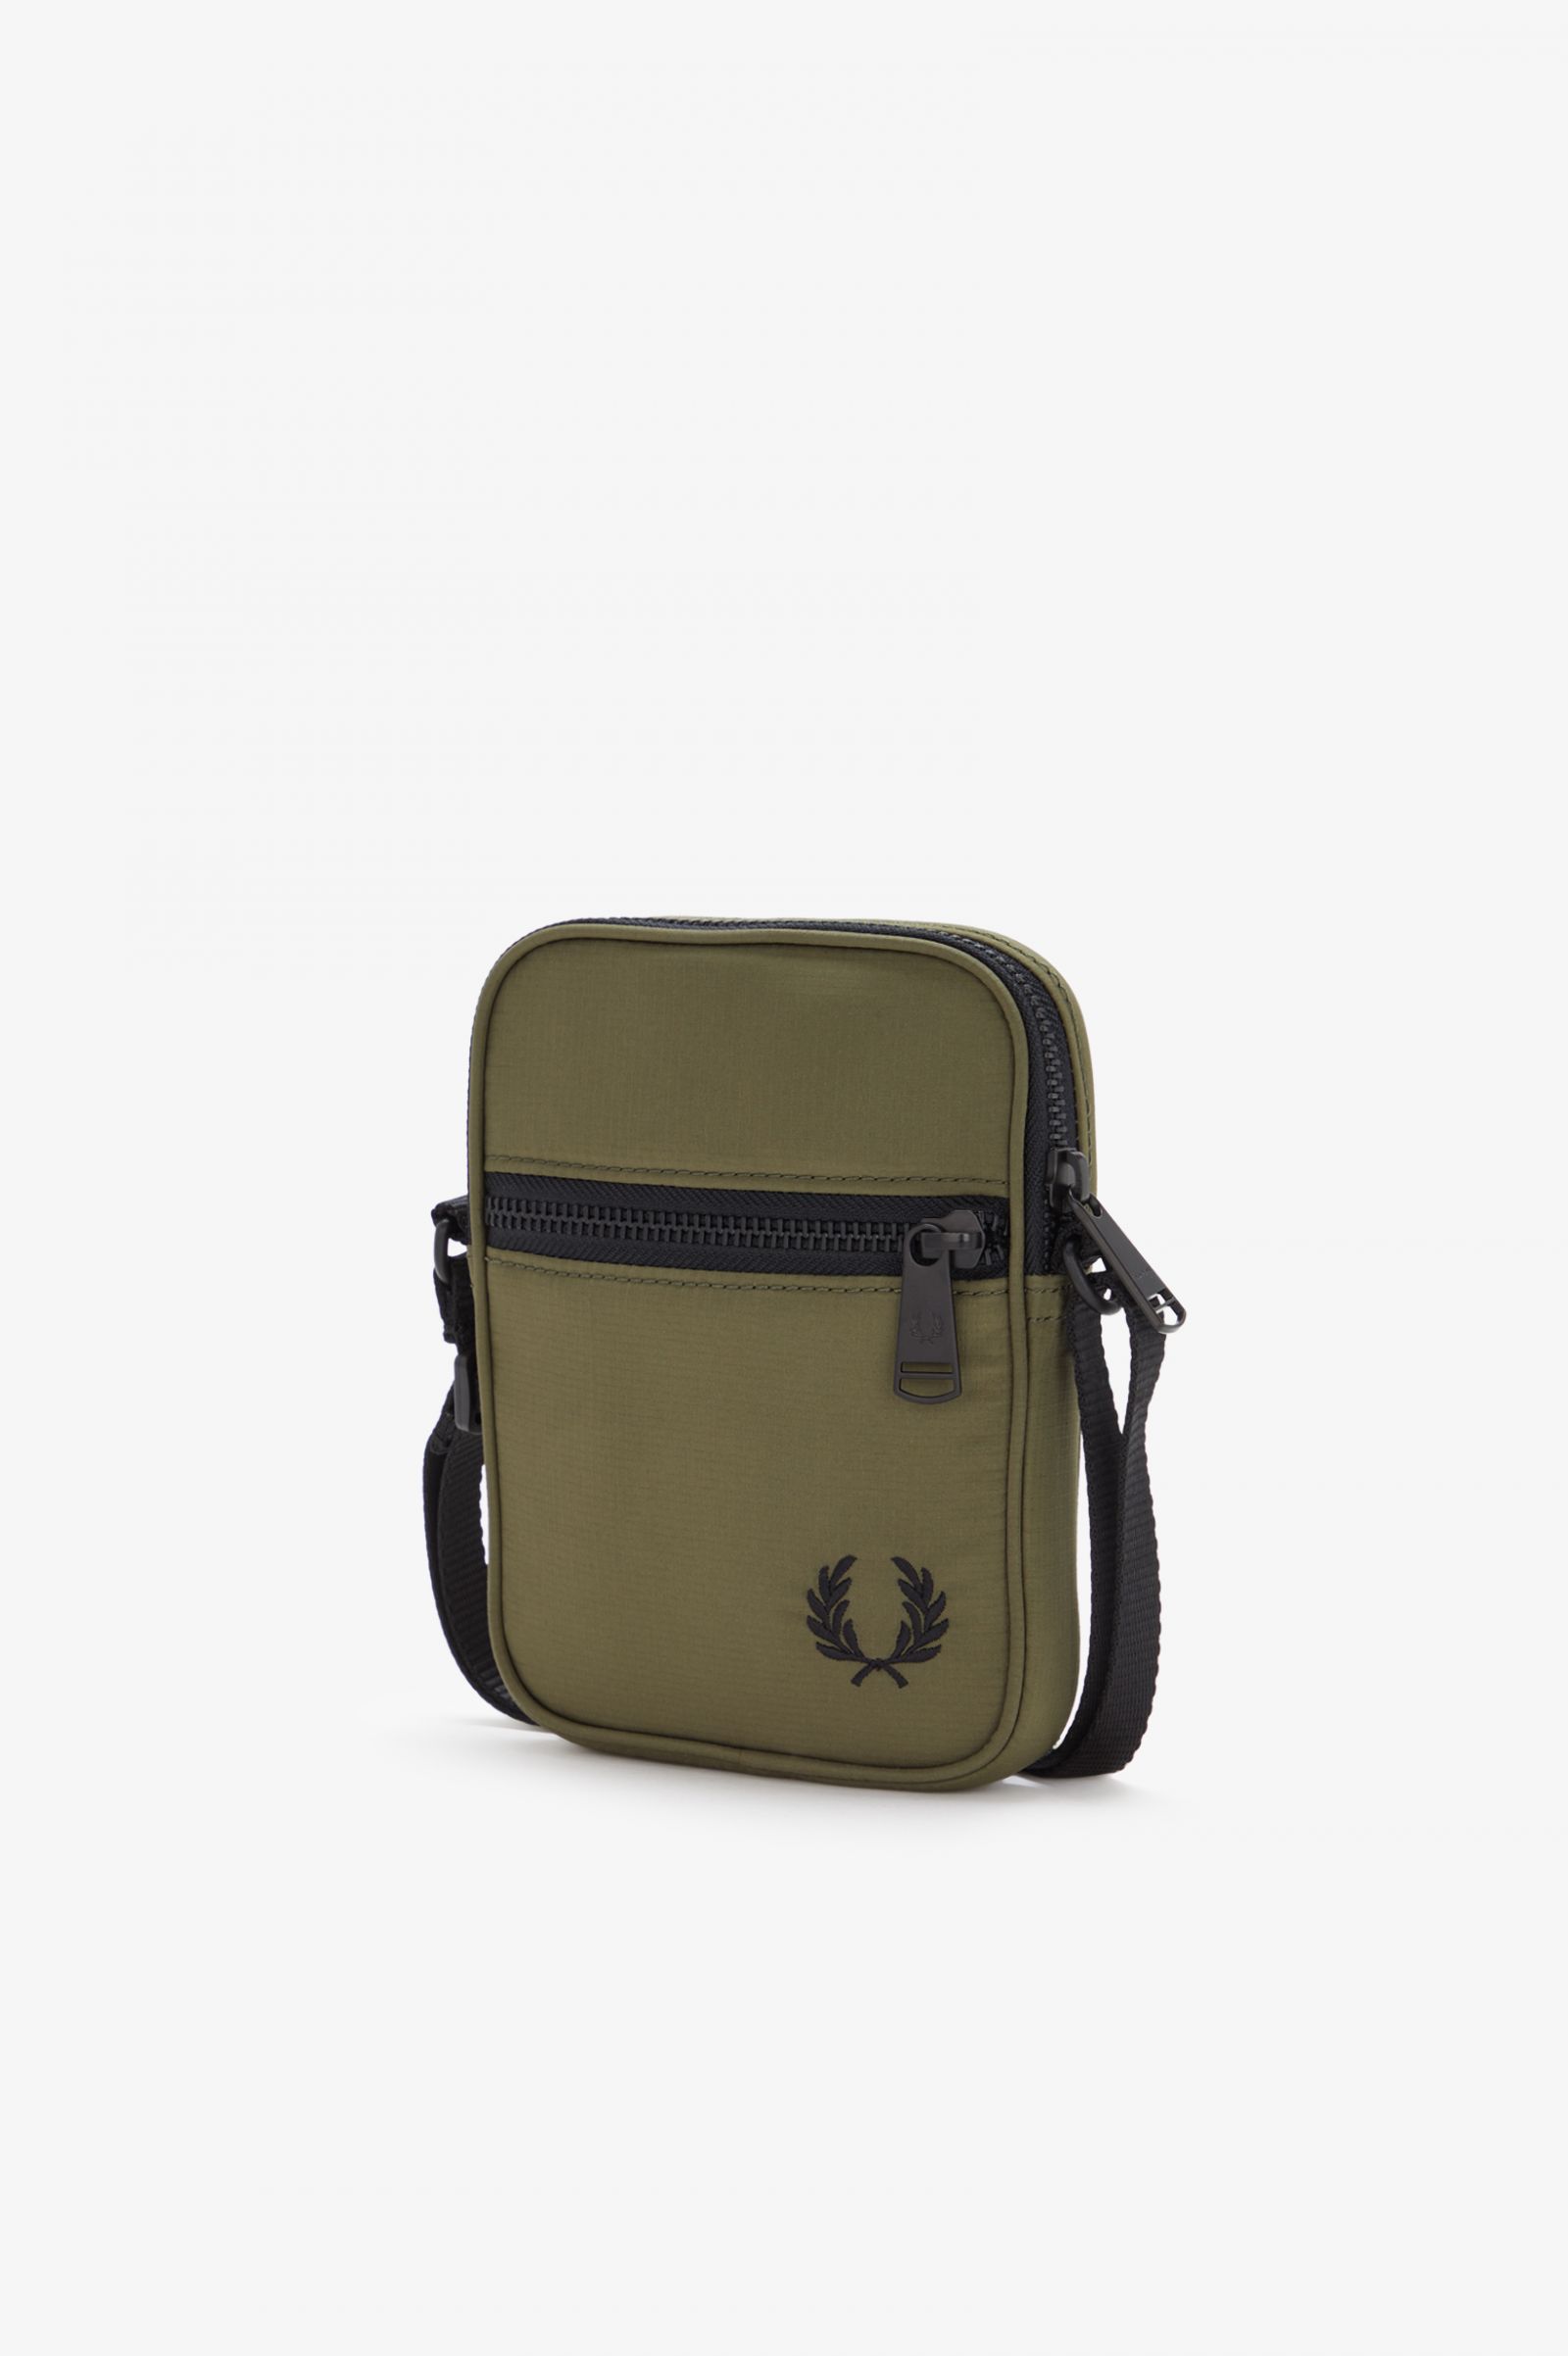 Ripstop Side Bag - Uniform Green | Accessories | Hats, Wallets